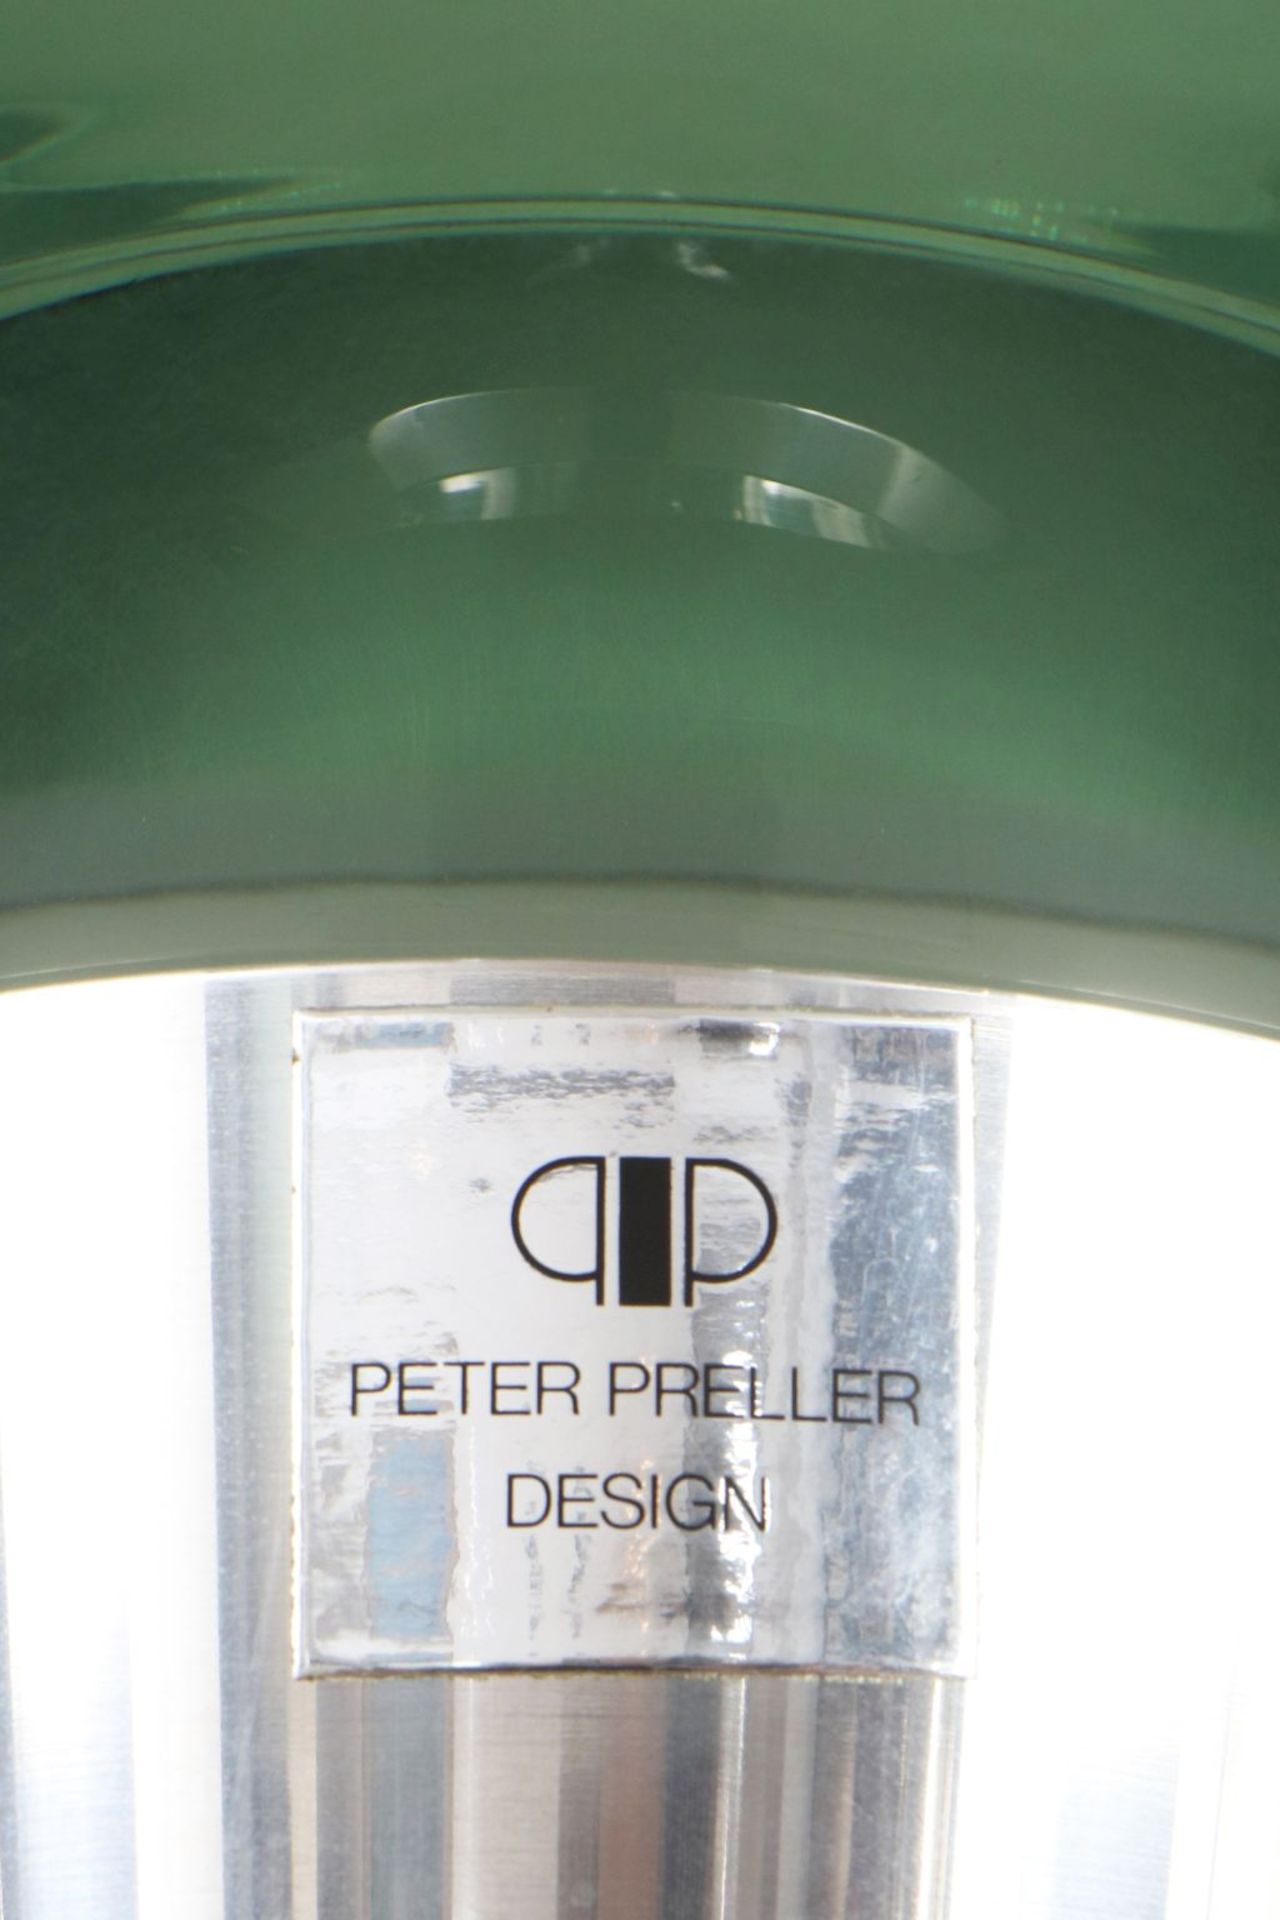 PETER PRELLER Design, HamburgStehlampe/Deckenfluter, schlanker, trompetenförmiger Alu-Stand mi - Image 2 of 3